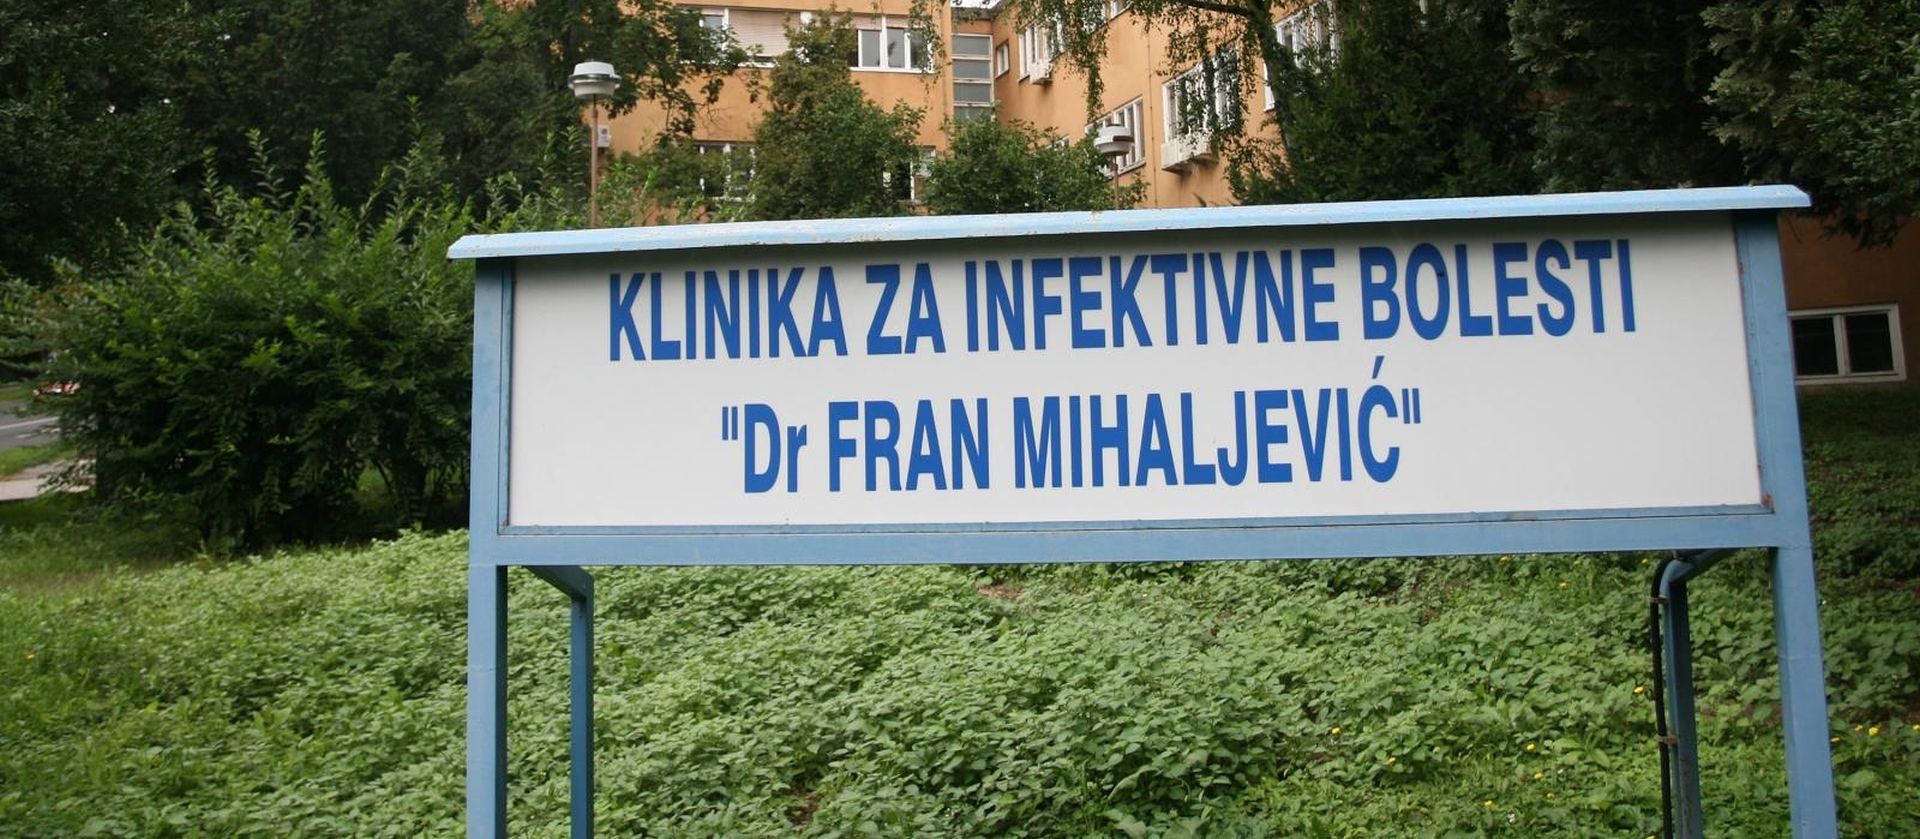 13.09.2010., Zagreb - Klinika za infektivne bolesti "Dr. Fran Mihaljevic". 
Photo: Goran Jakus/PIXSELL